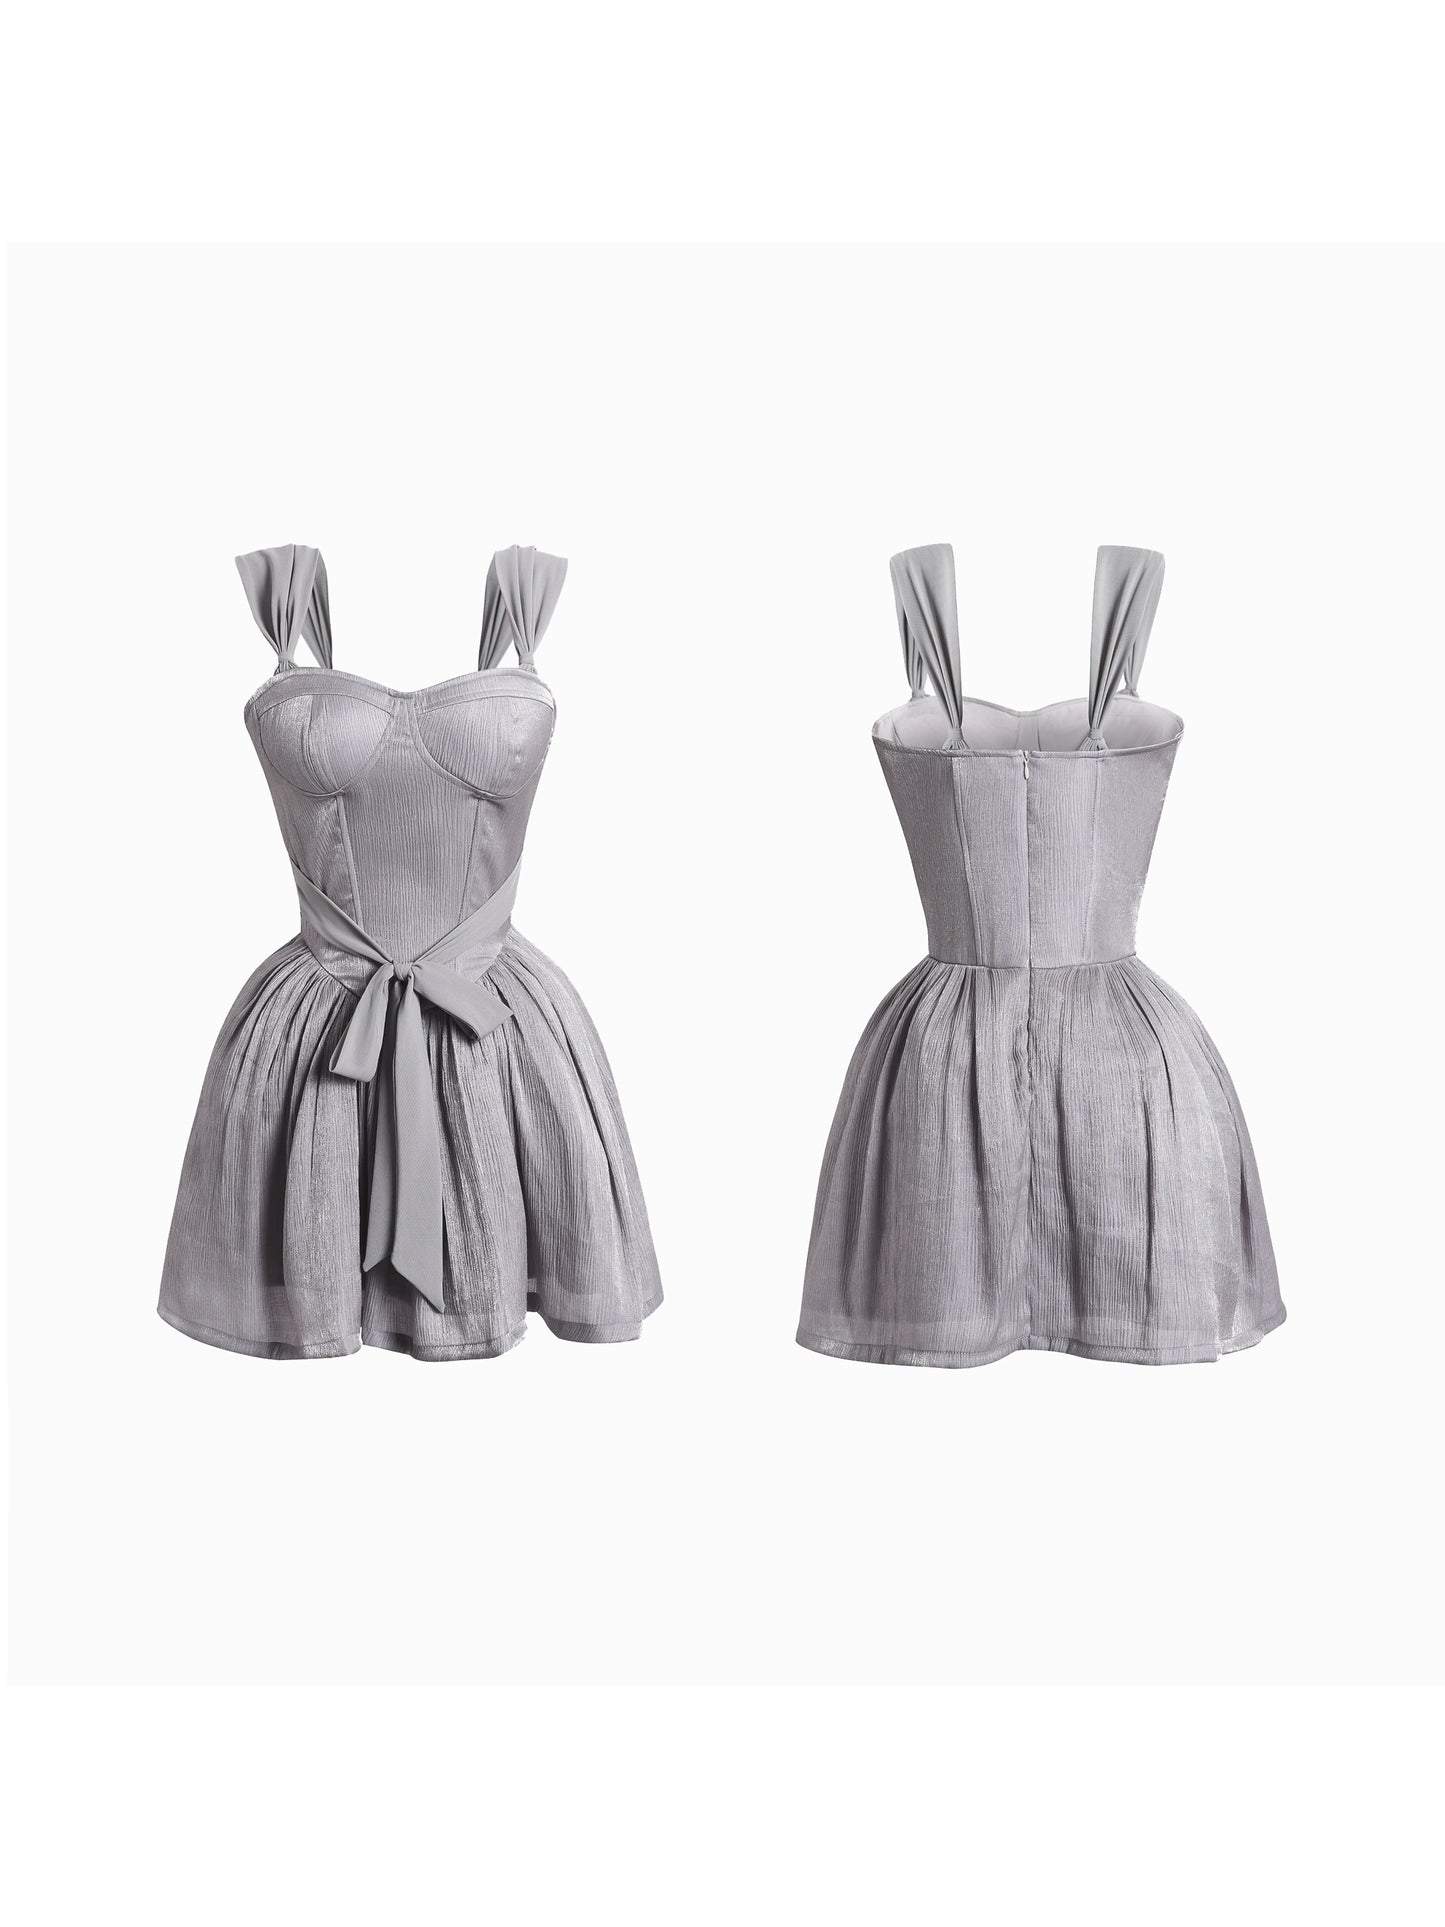 Silver Gray Ballet Style Strapless Dress